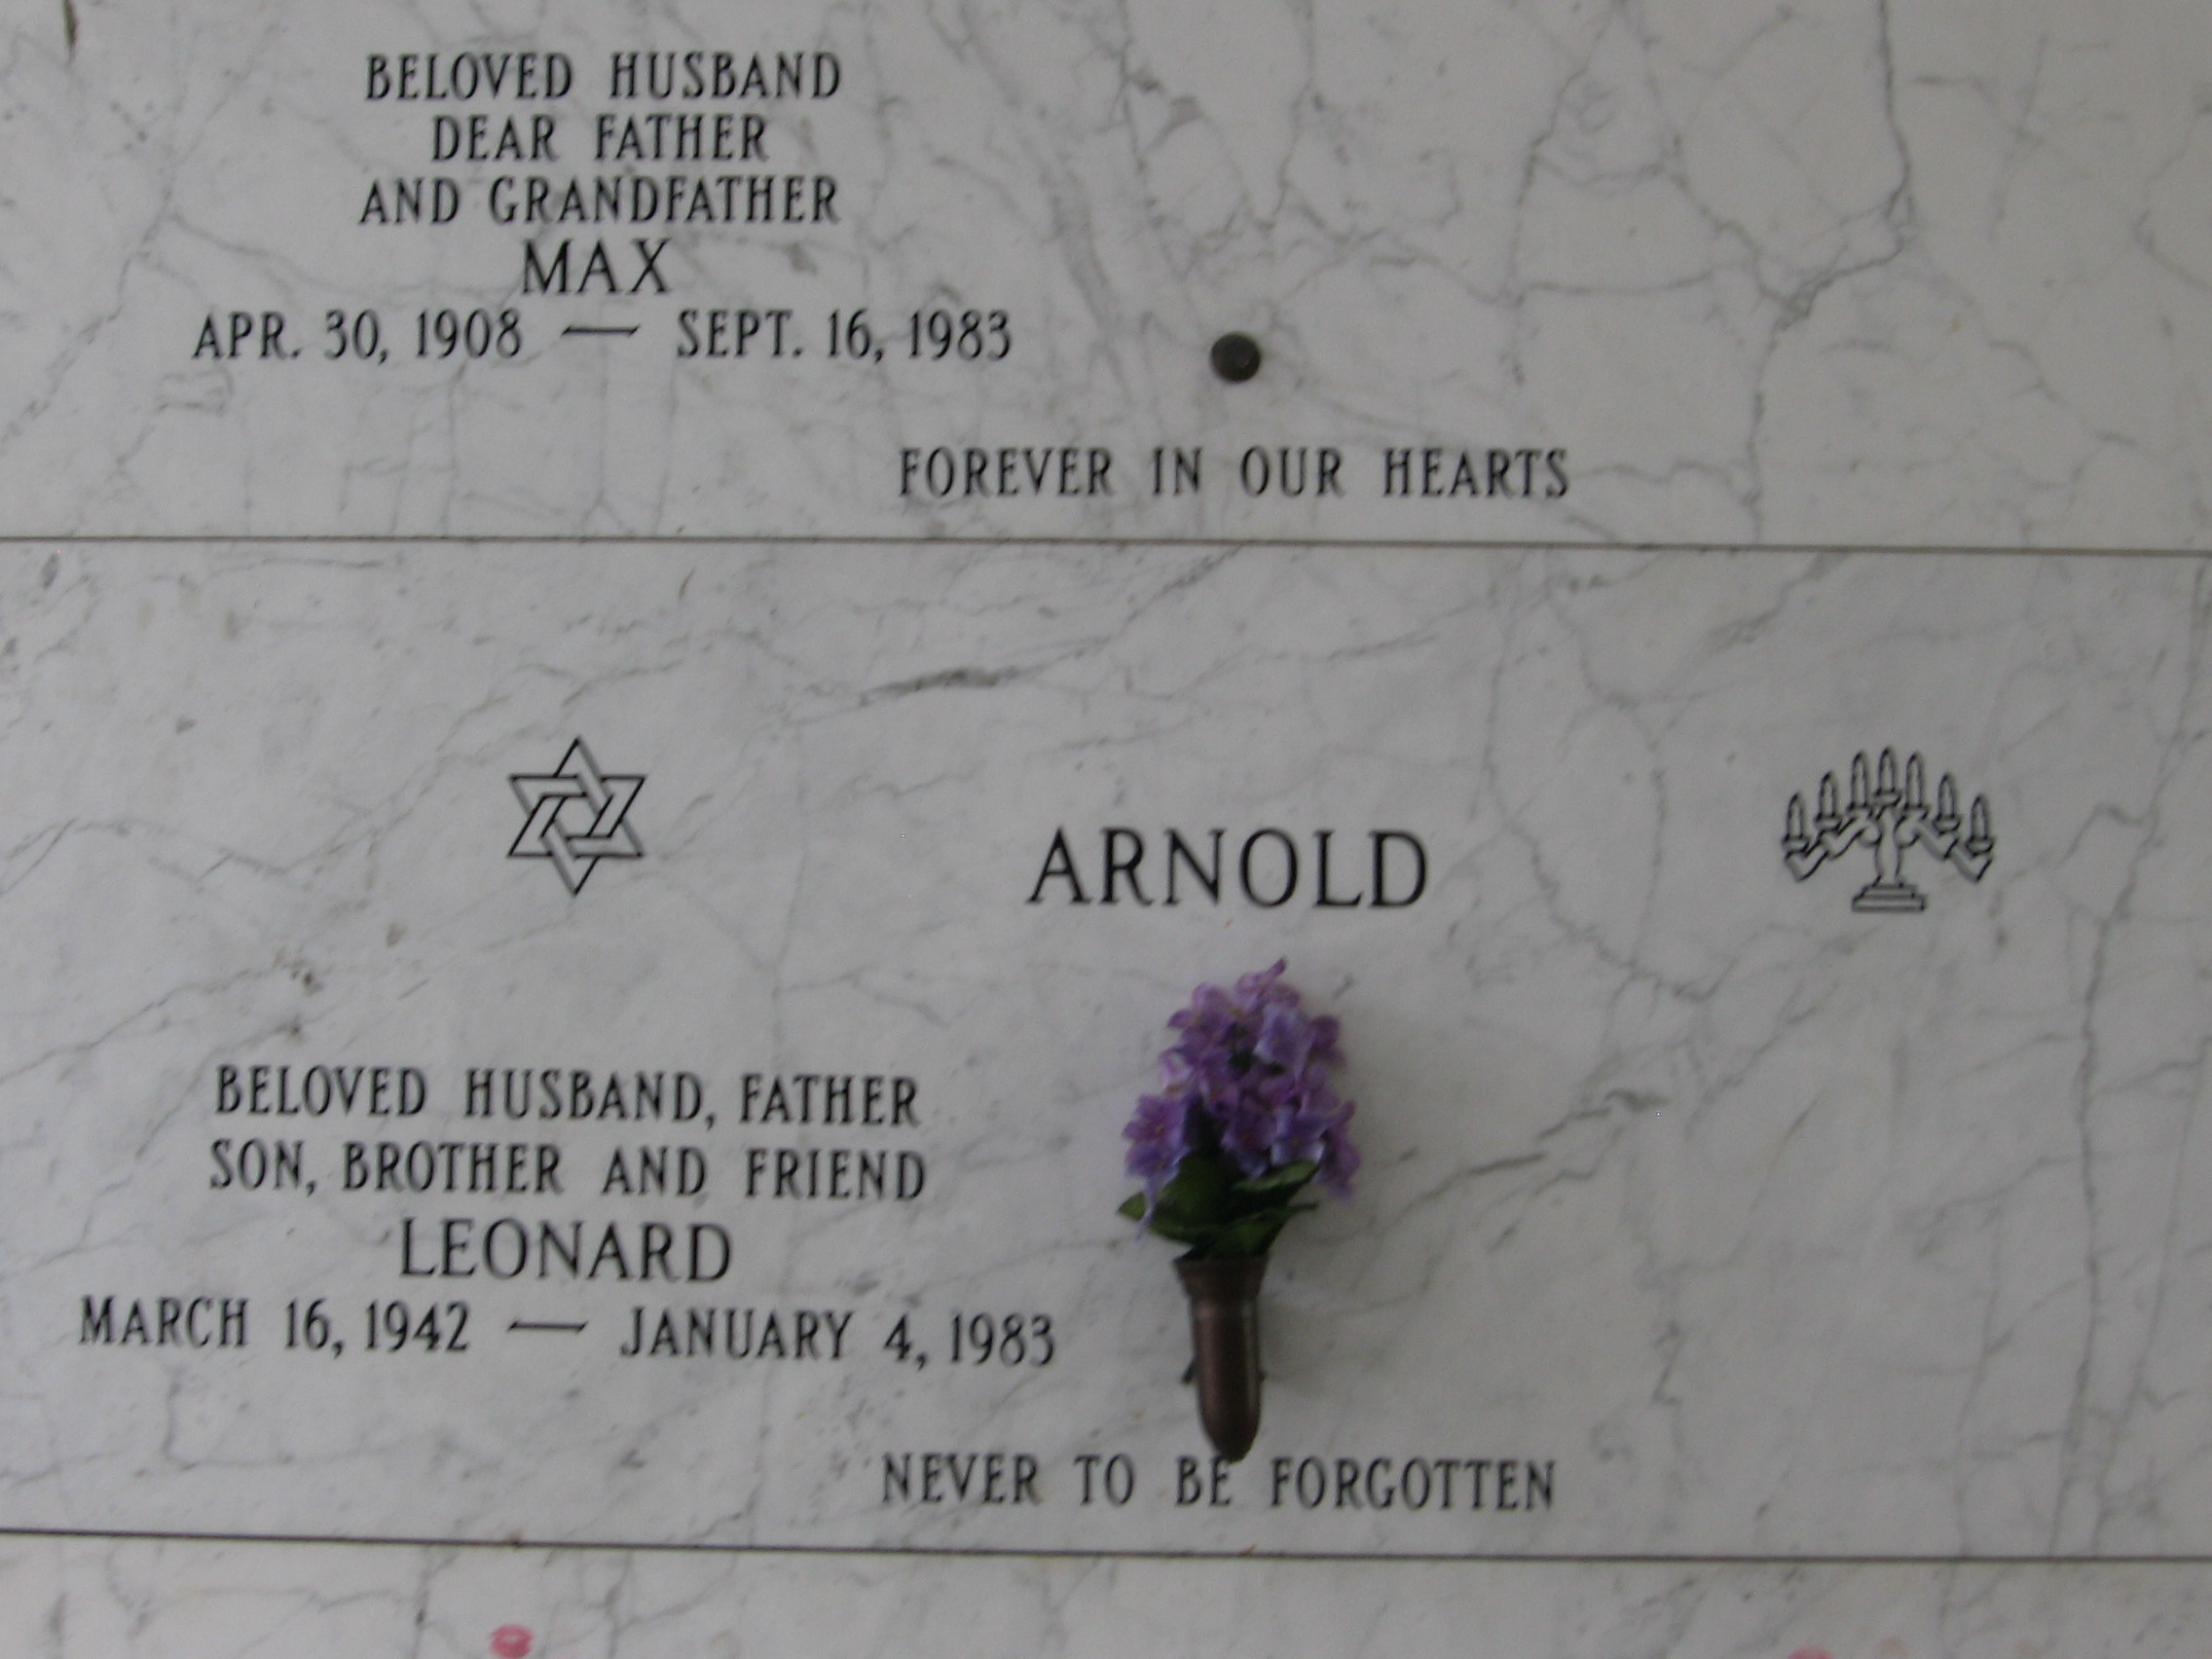 Leonard Arnold